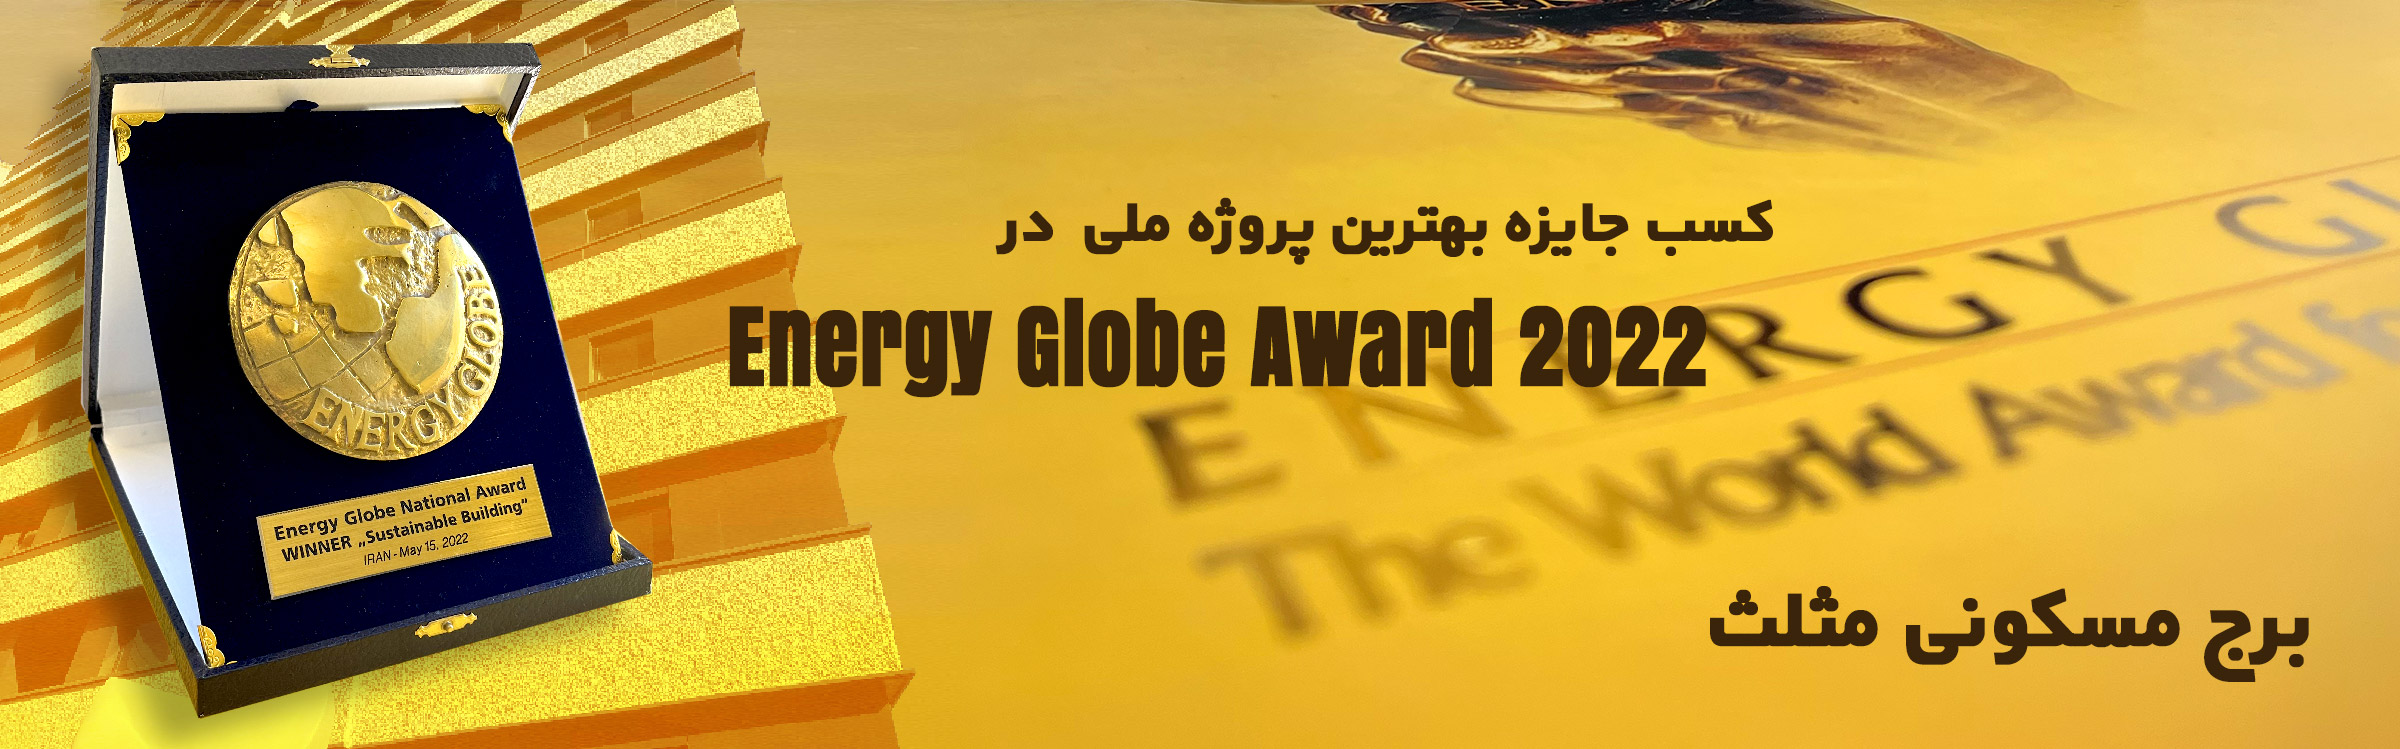 Energy Globe Award 2022 mosalas